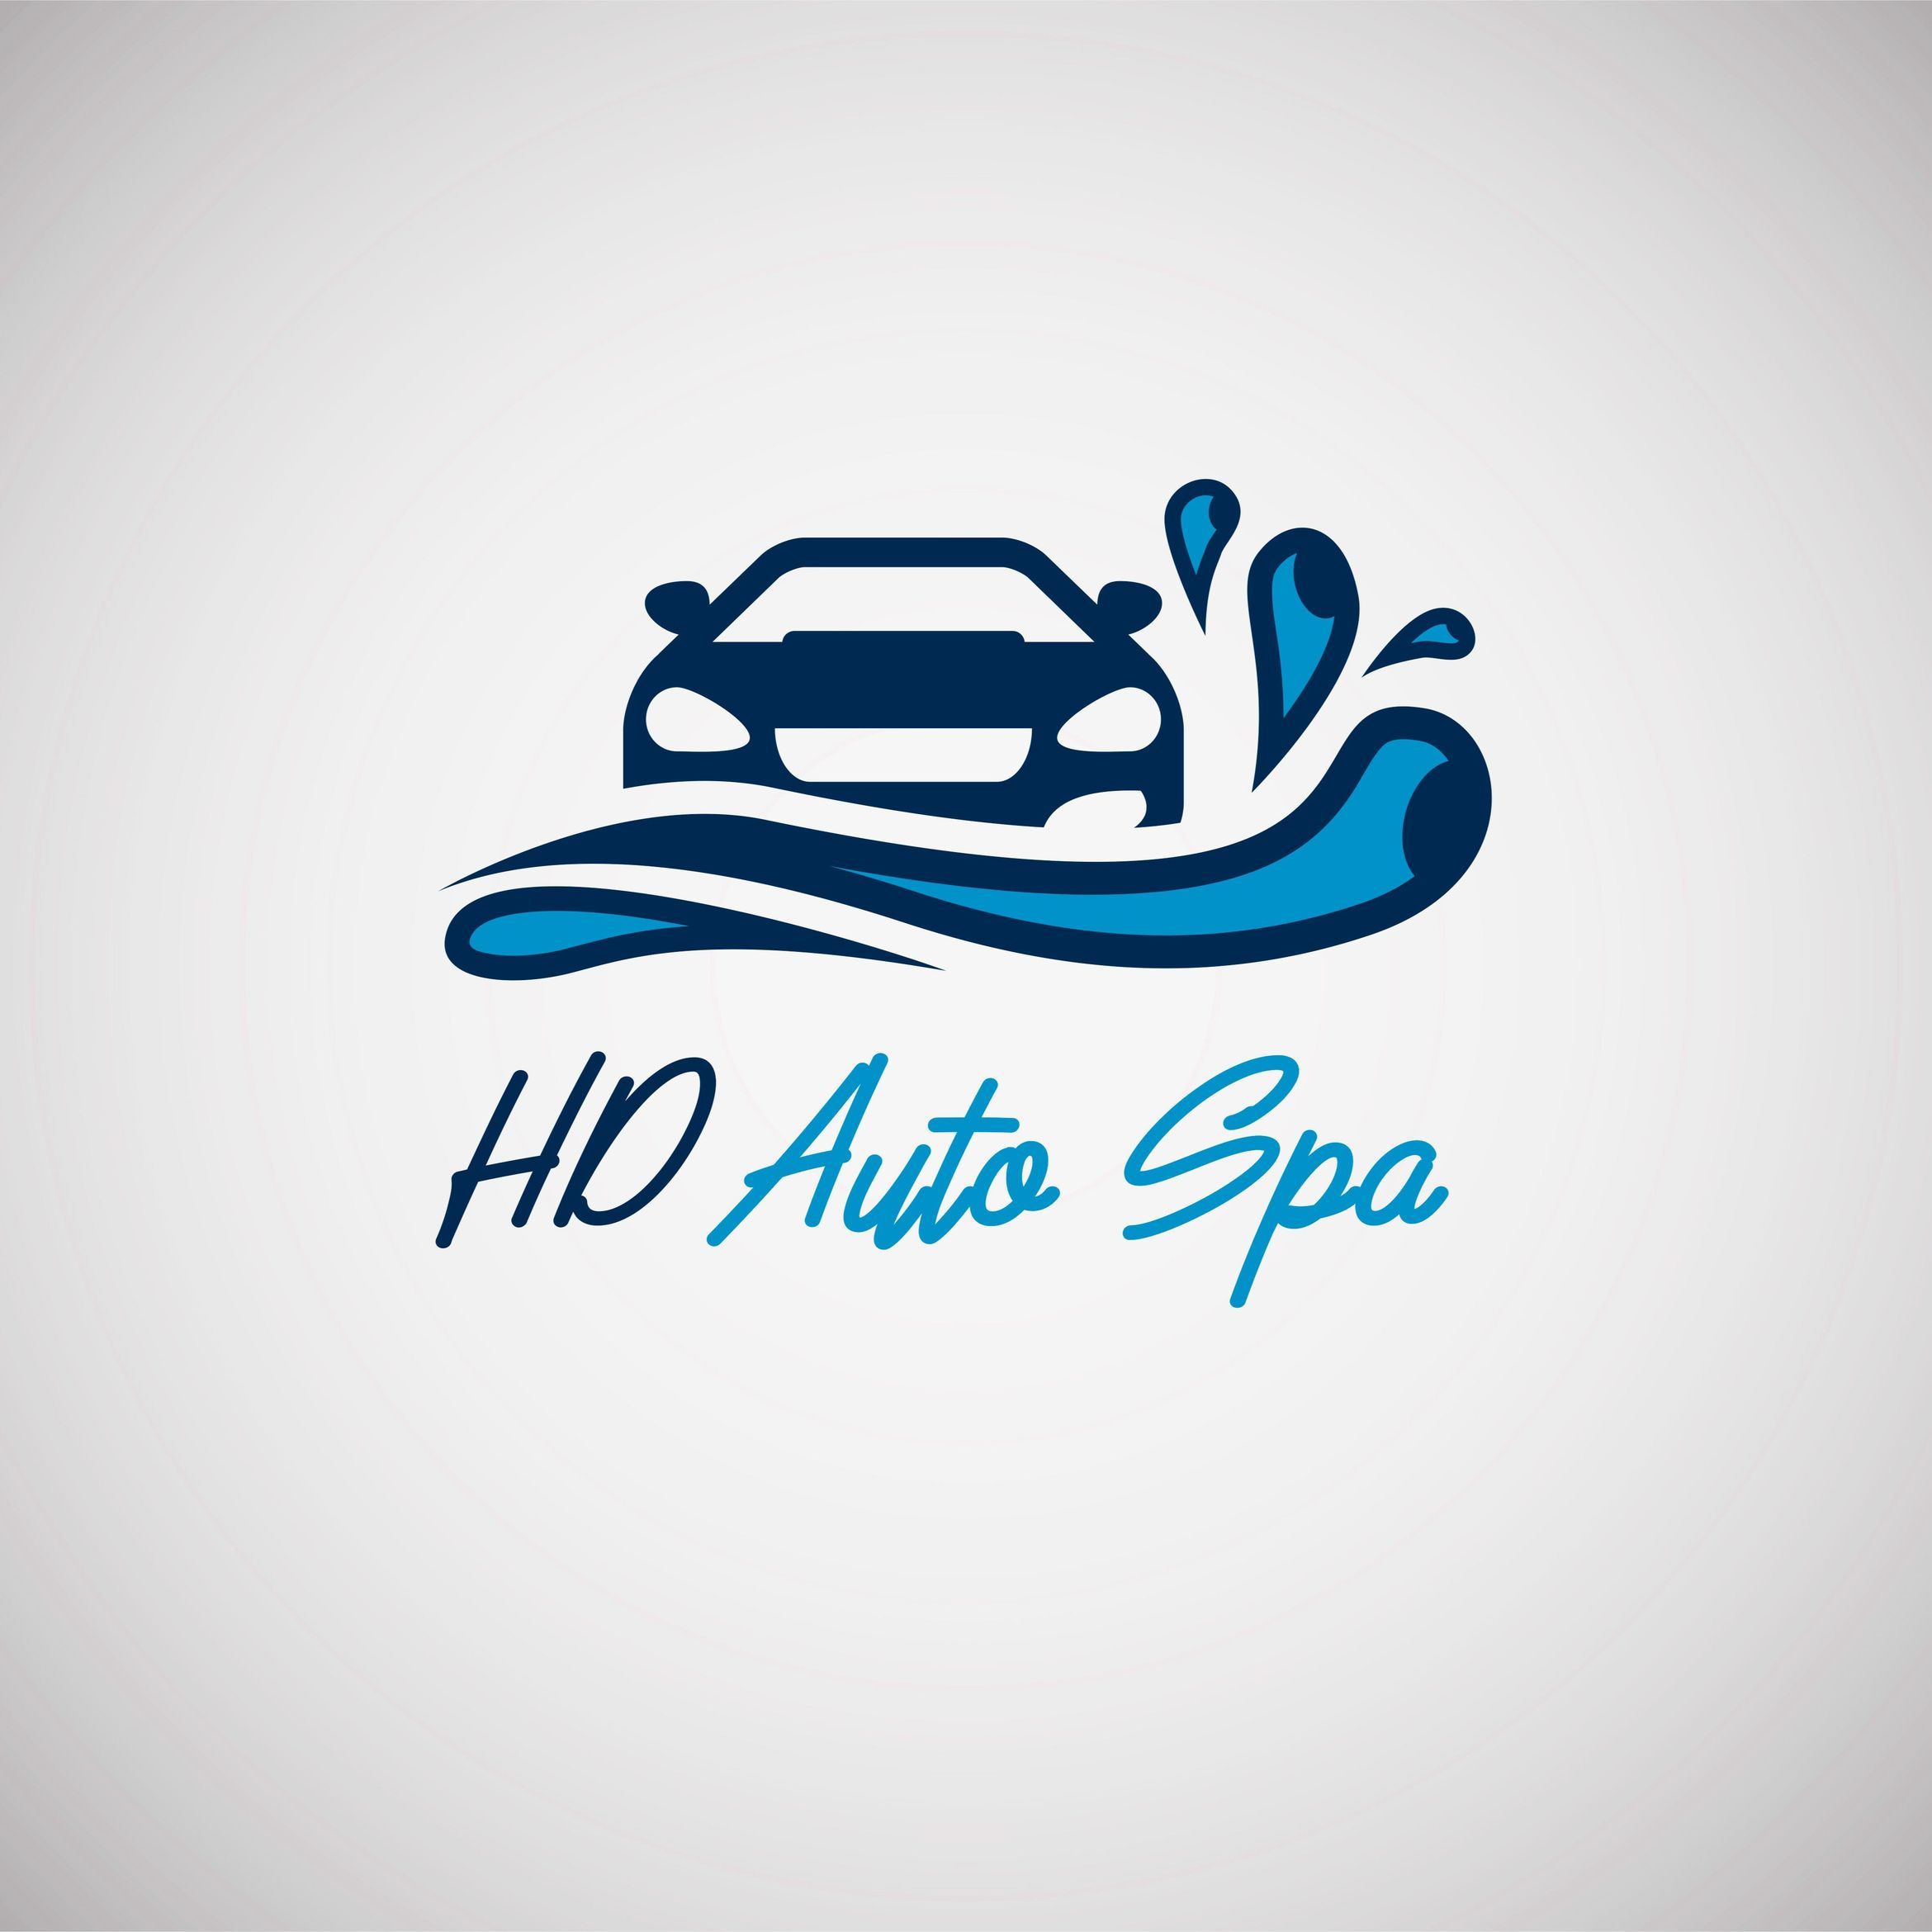 High Definition Auto Spa, 16709 Chatsworth St, Granada Hills, Granada Hills 91344